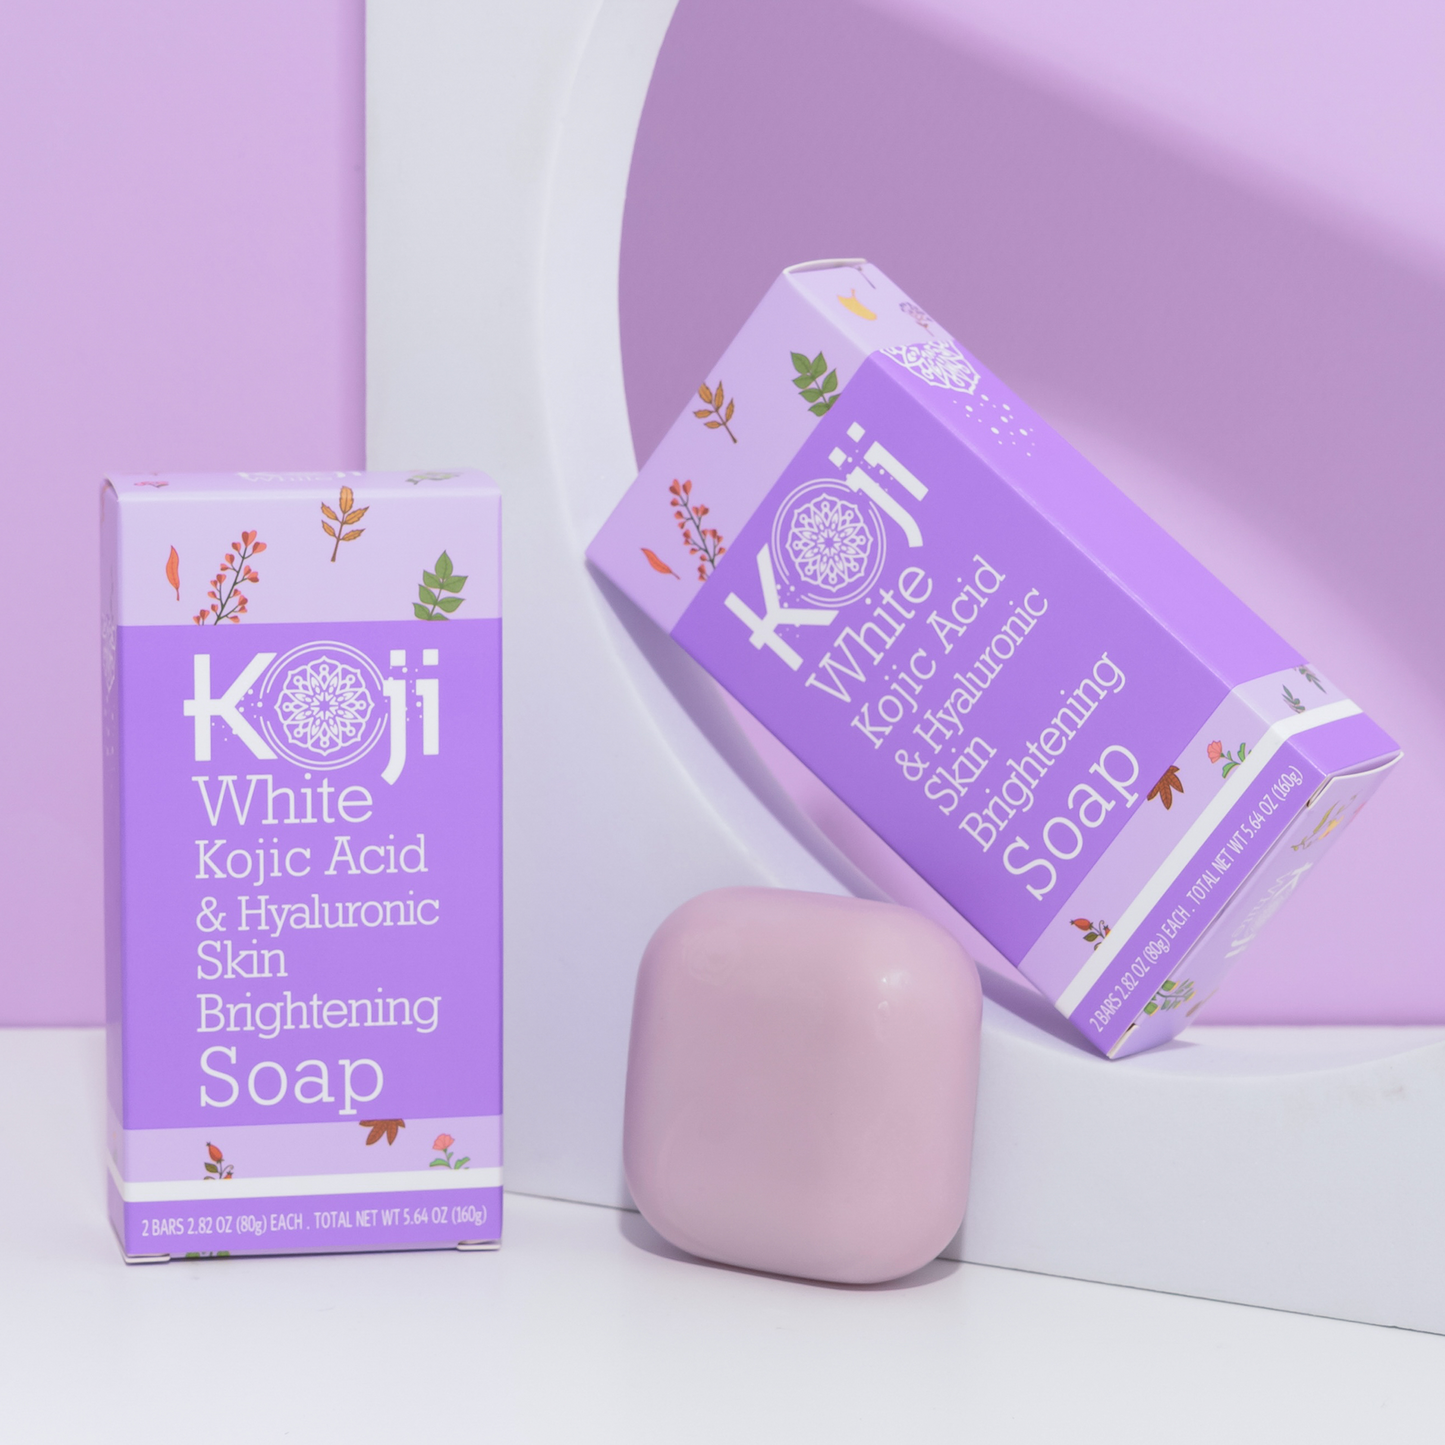 Kojic Acid & Hyaluronic Acid Brightening Soap (2 Bars)